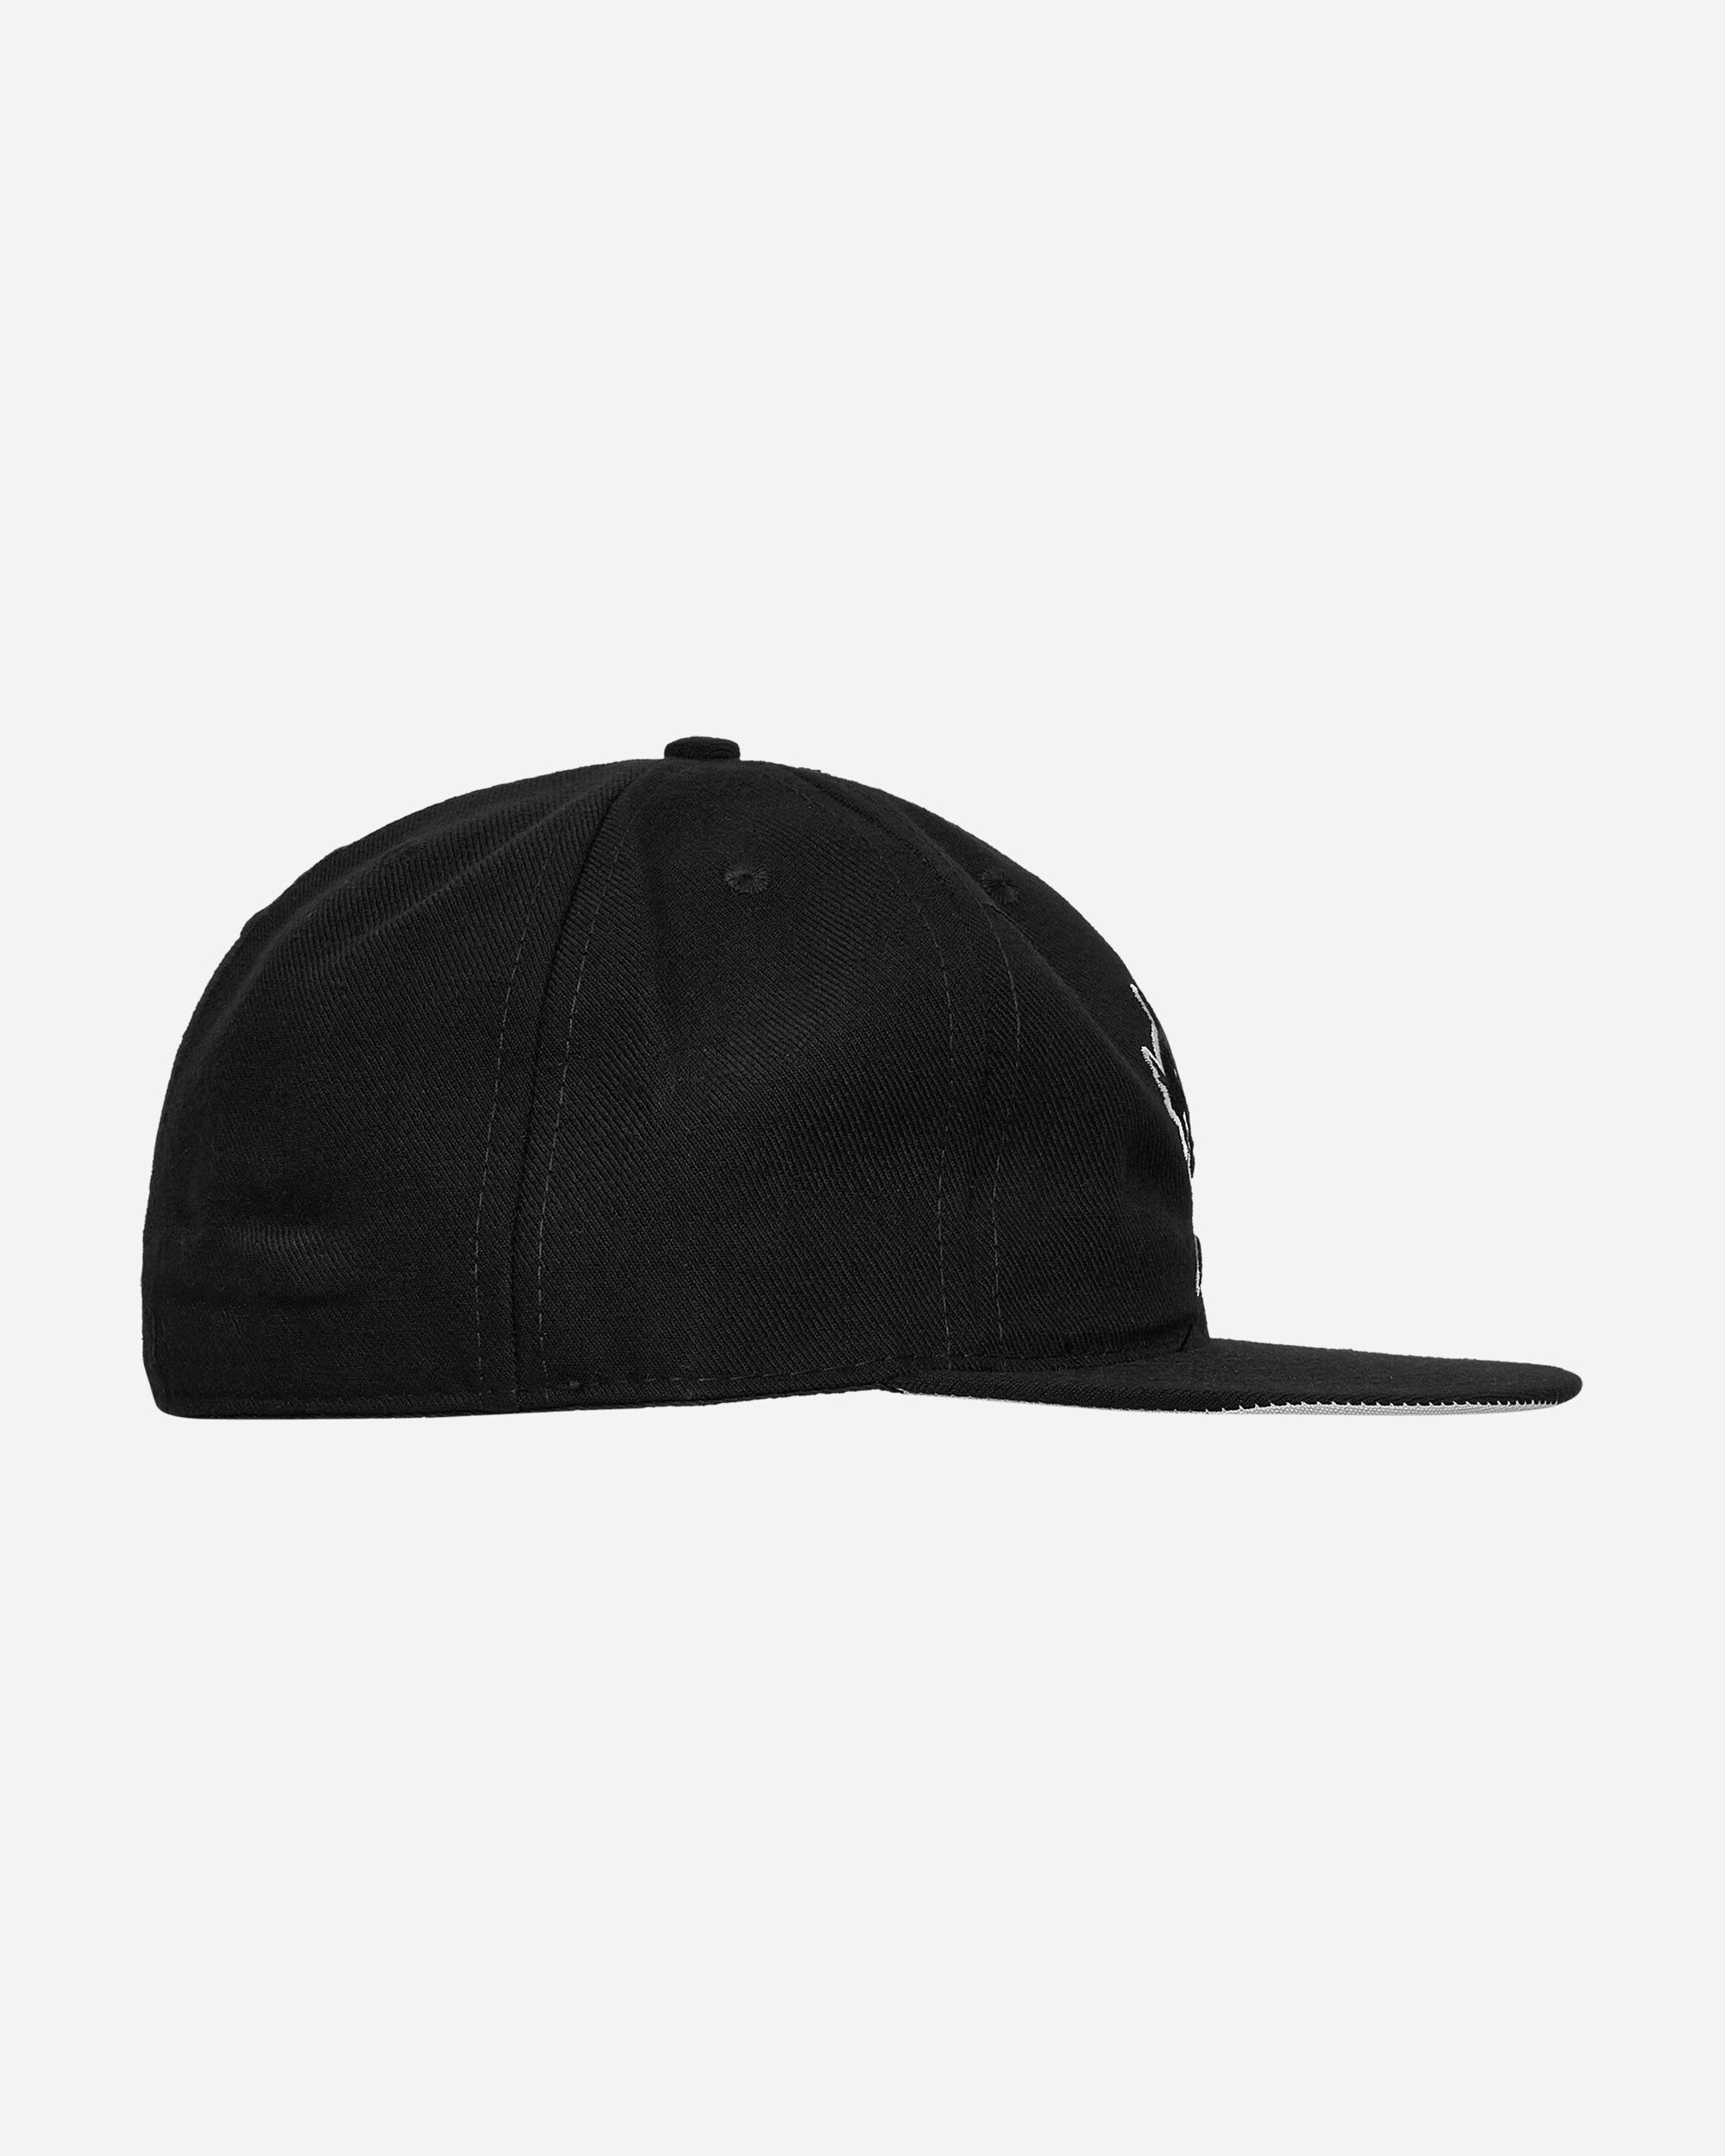 Stray Rats Rat Logo Fitted Hat Black Hats Caps SRH1180W BLACK